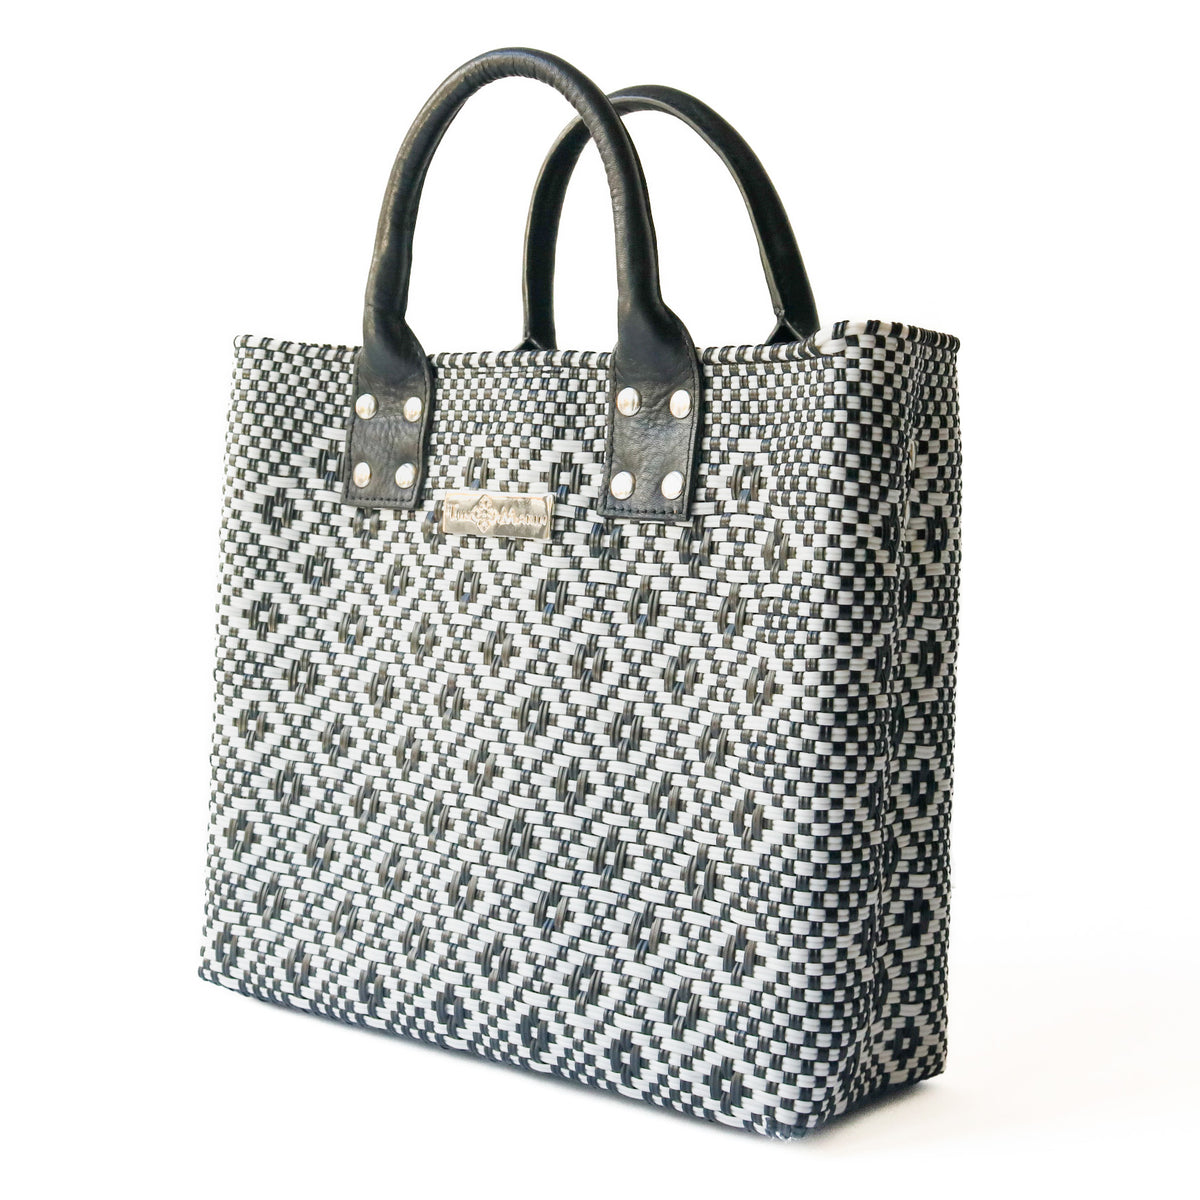 Panda Large Crossbody Bag - Black Leather | Tin Marin | Artisan Bags ...